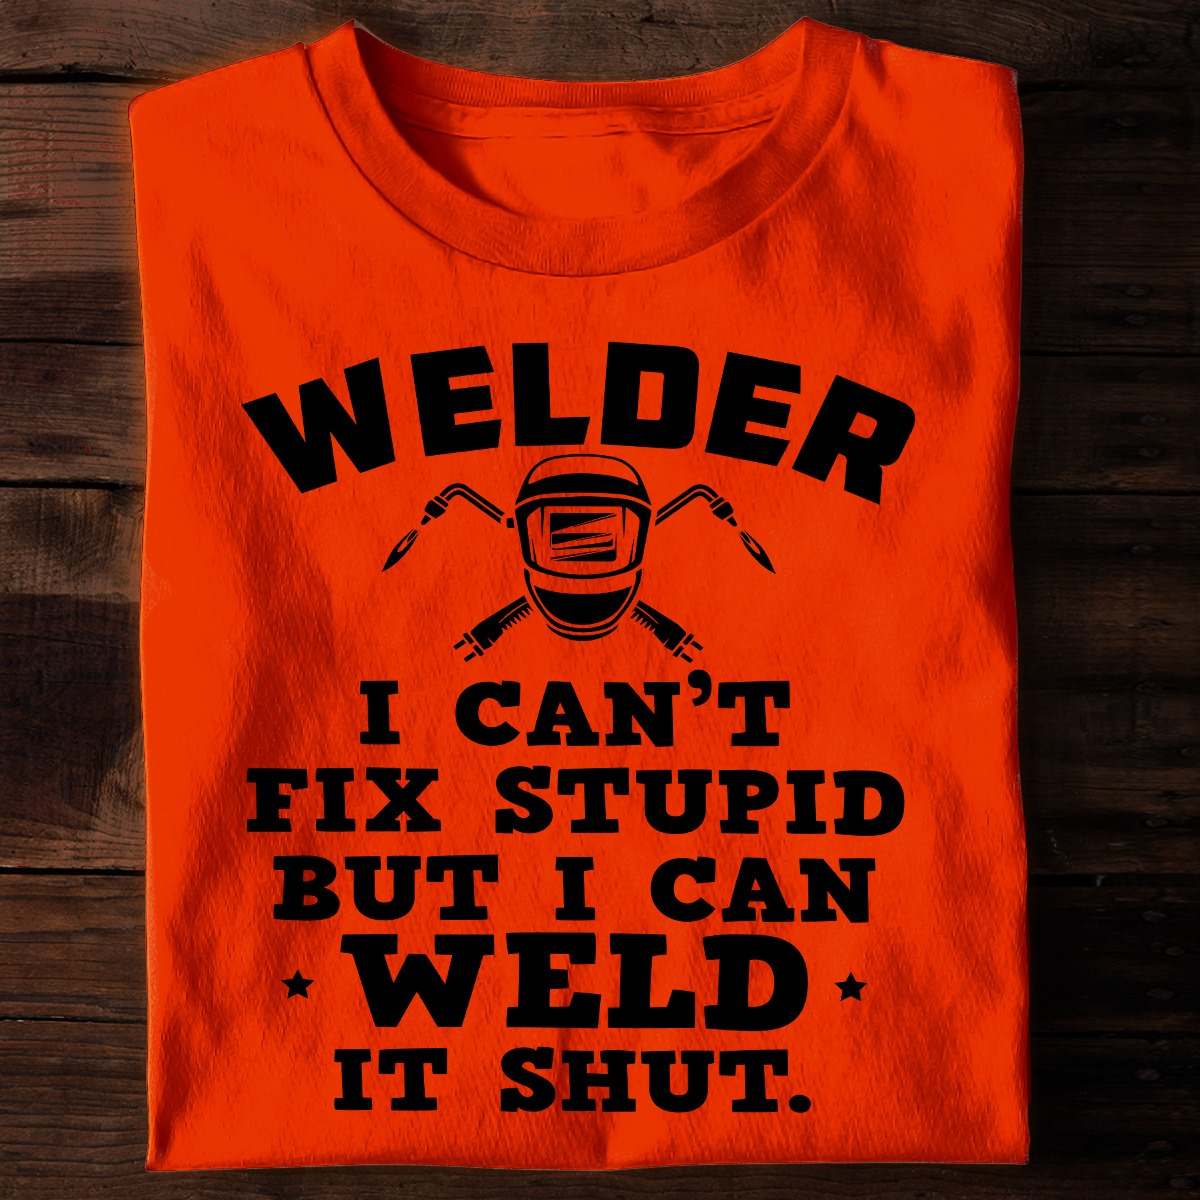 Man Welder - Welder i can't fix stupid but i can weld it shut